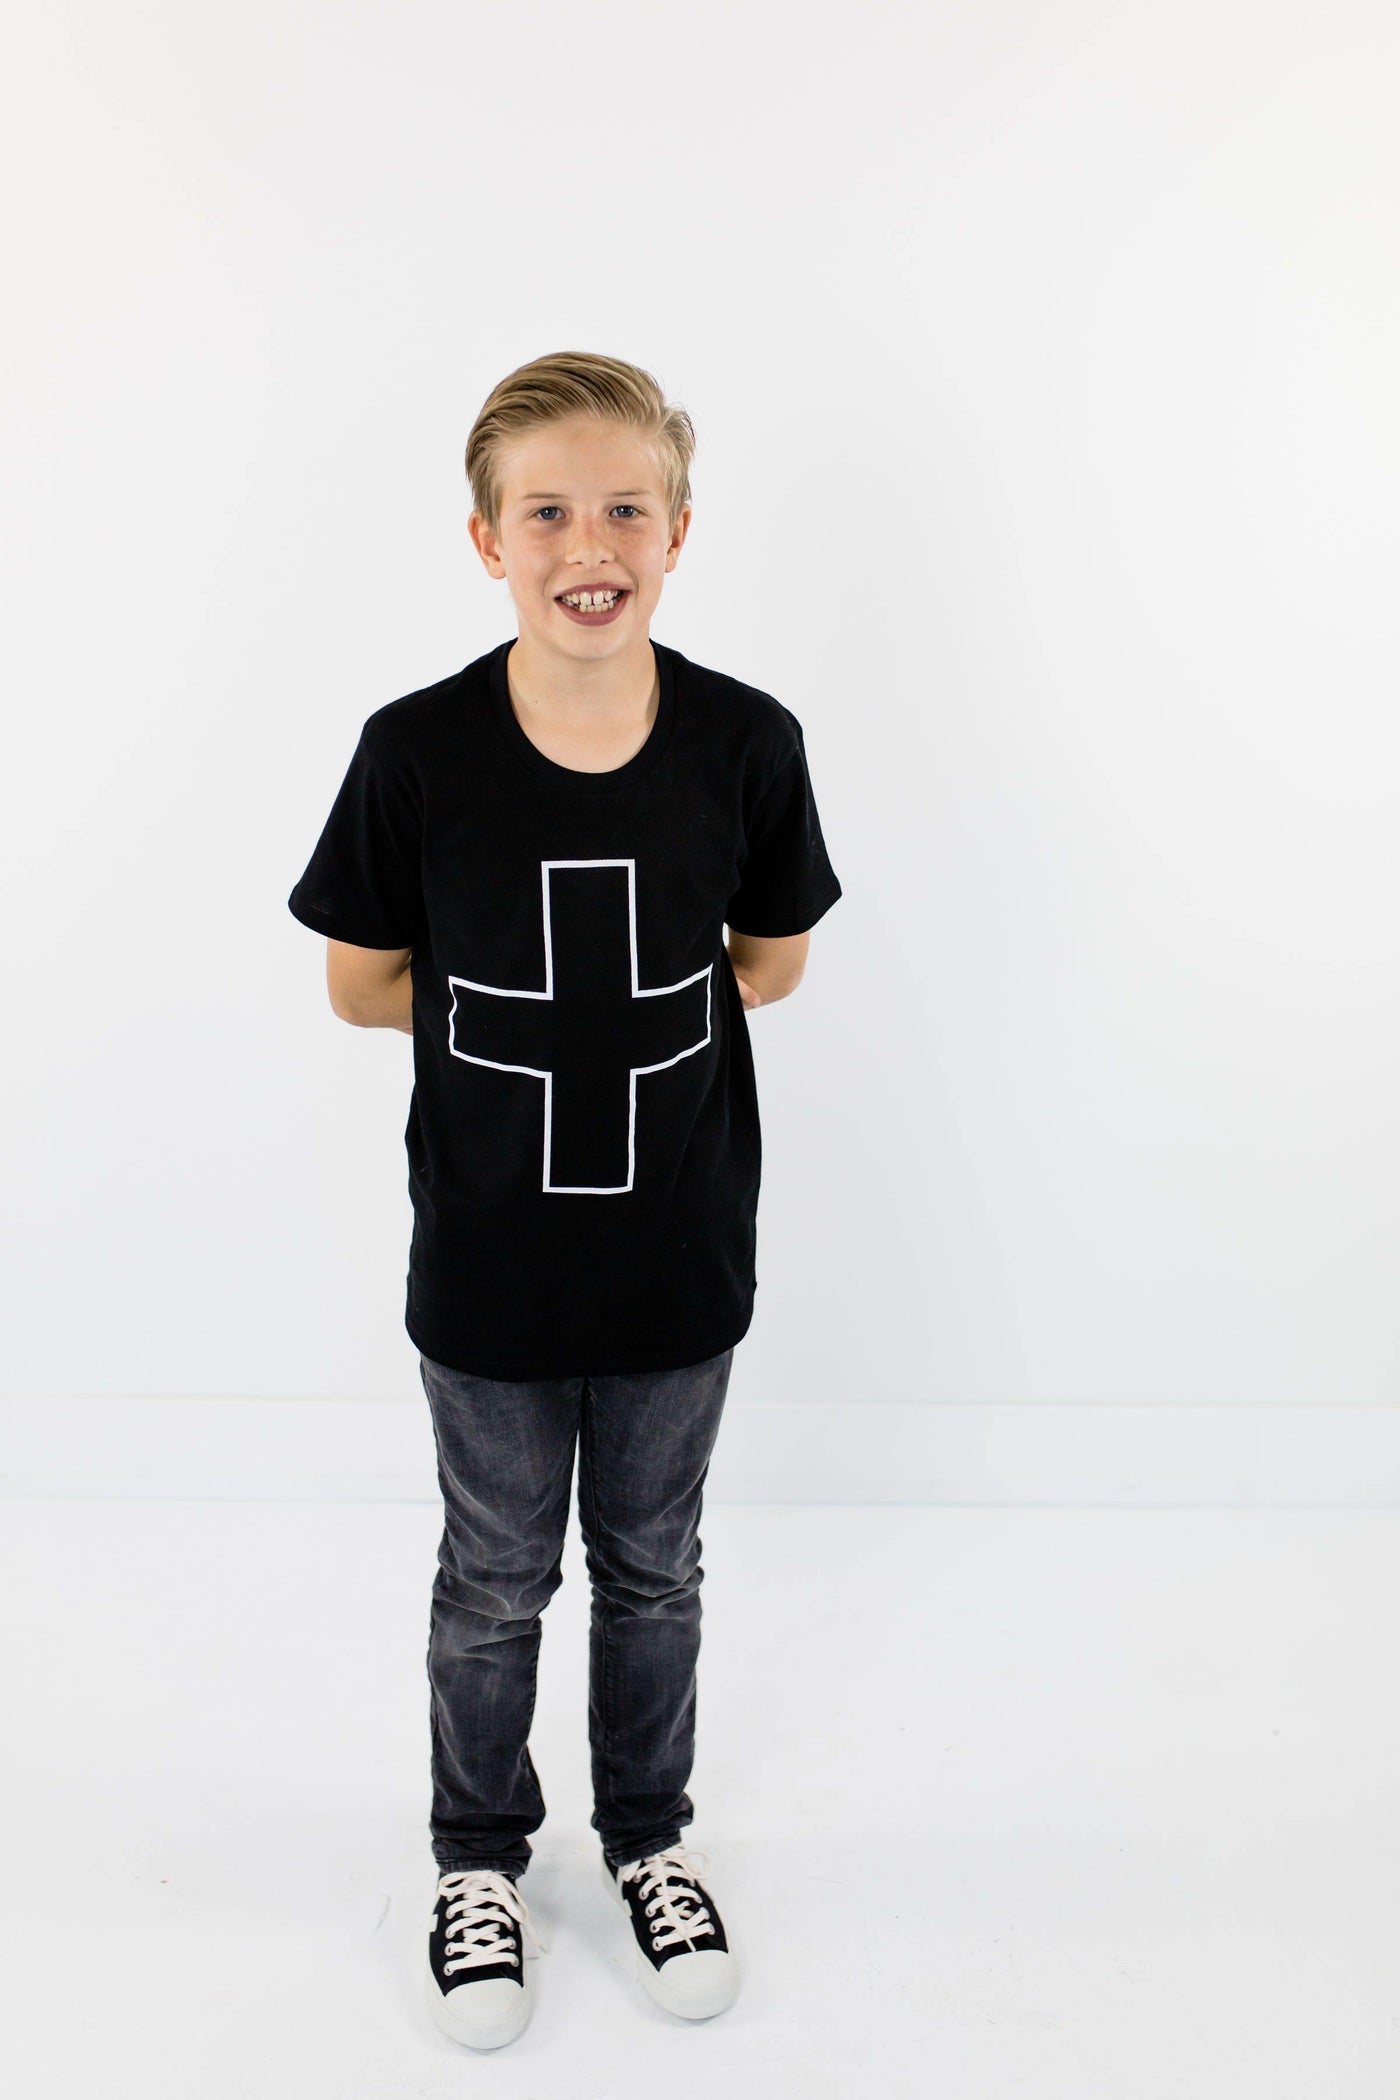 Boy wearing organic cotton black t-shirt with printed design. 